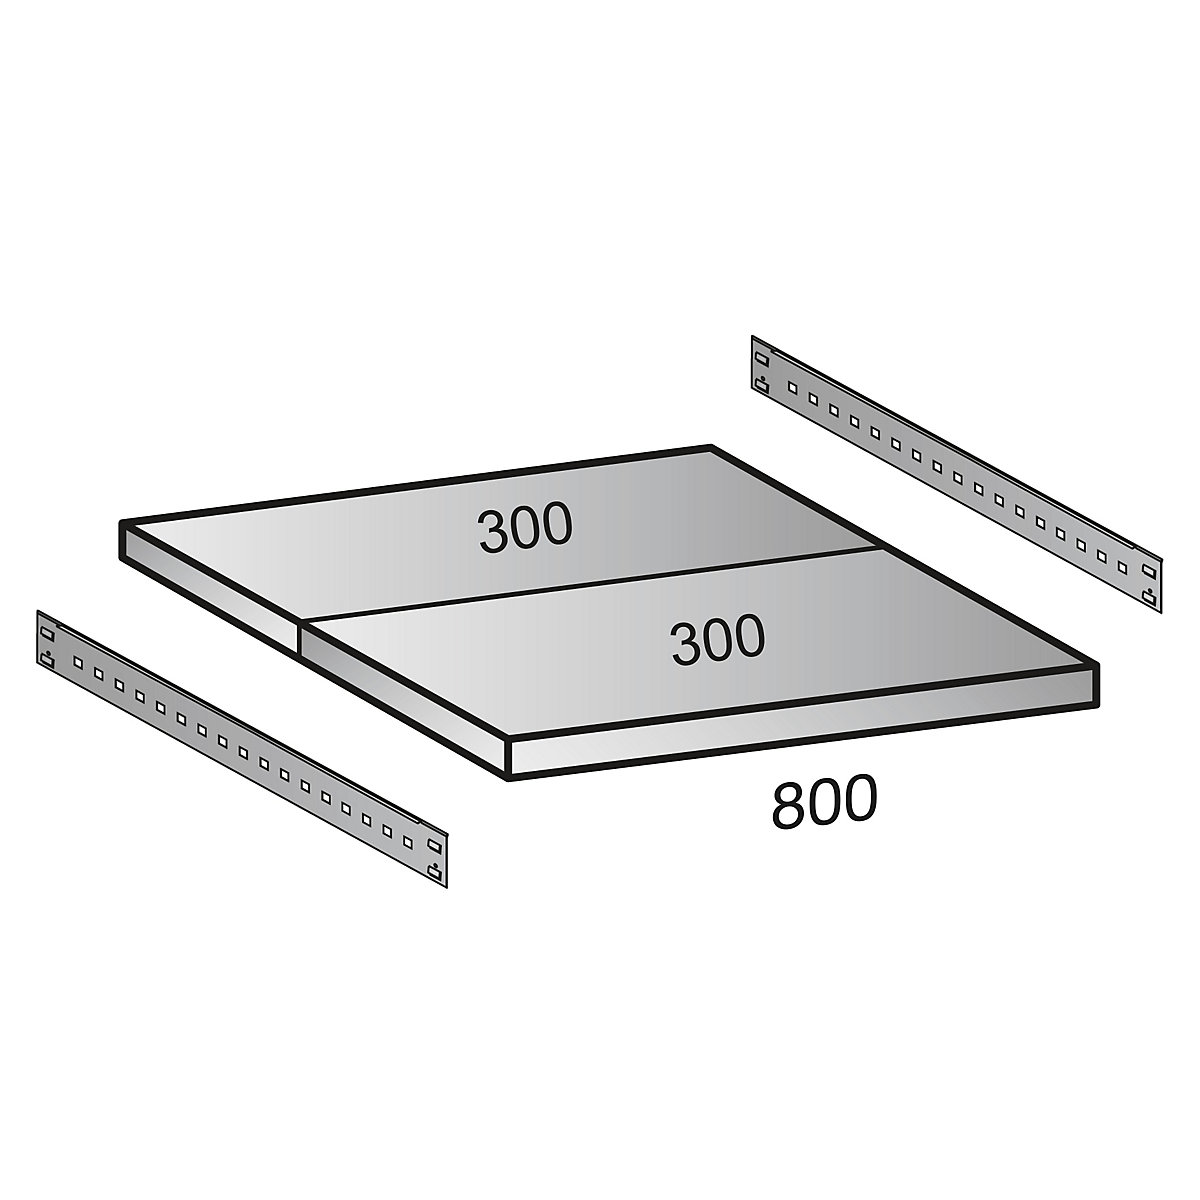 Shelf for CLEANA boltless shelf unit, shelf width 800 mm, depth 600 mm